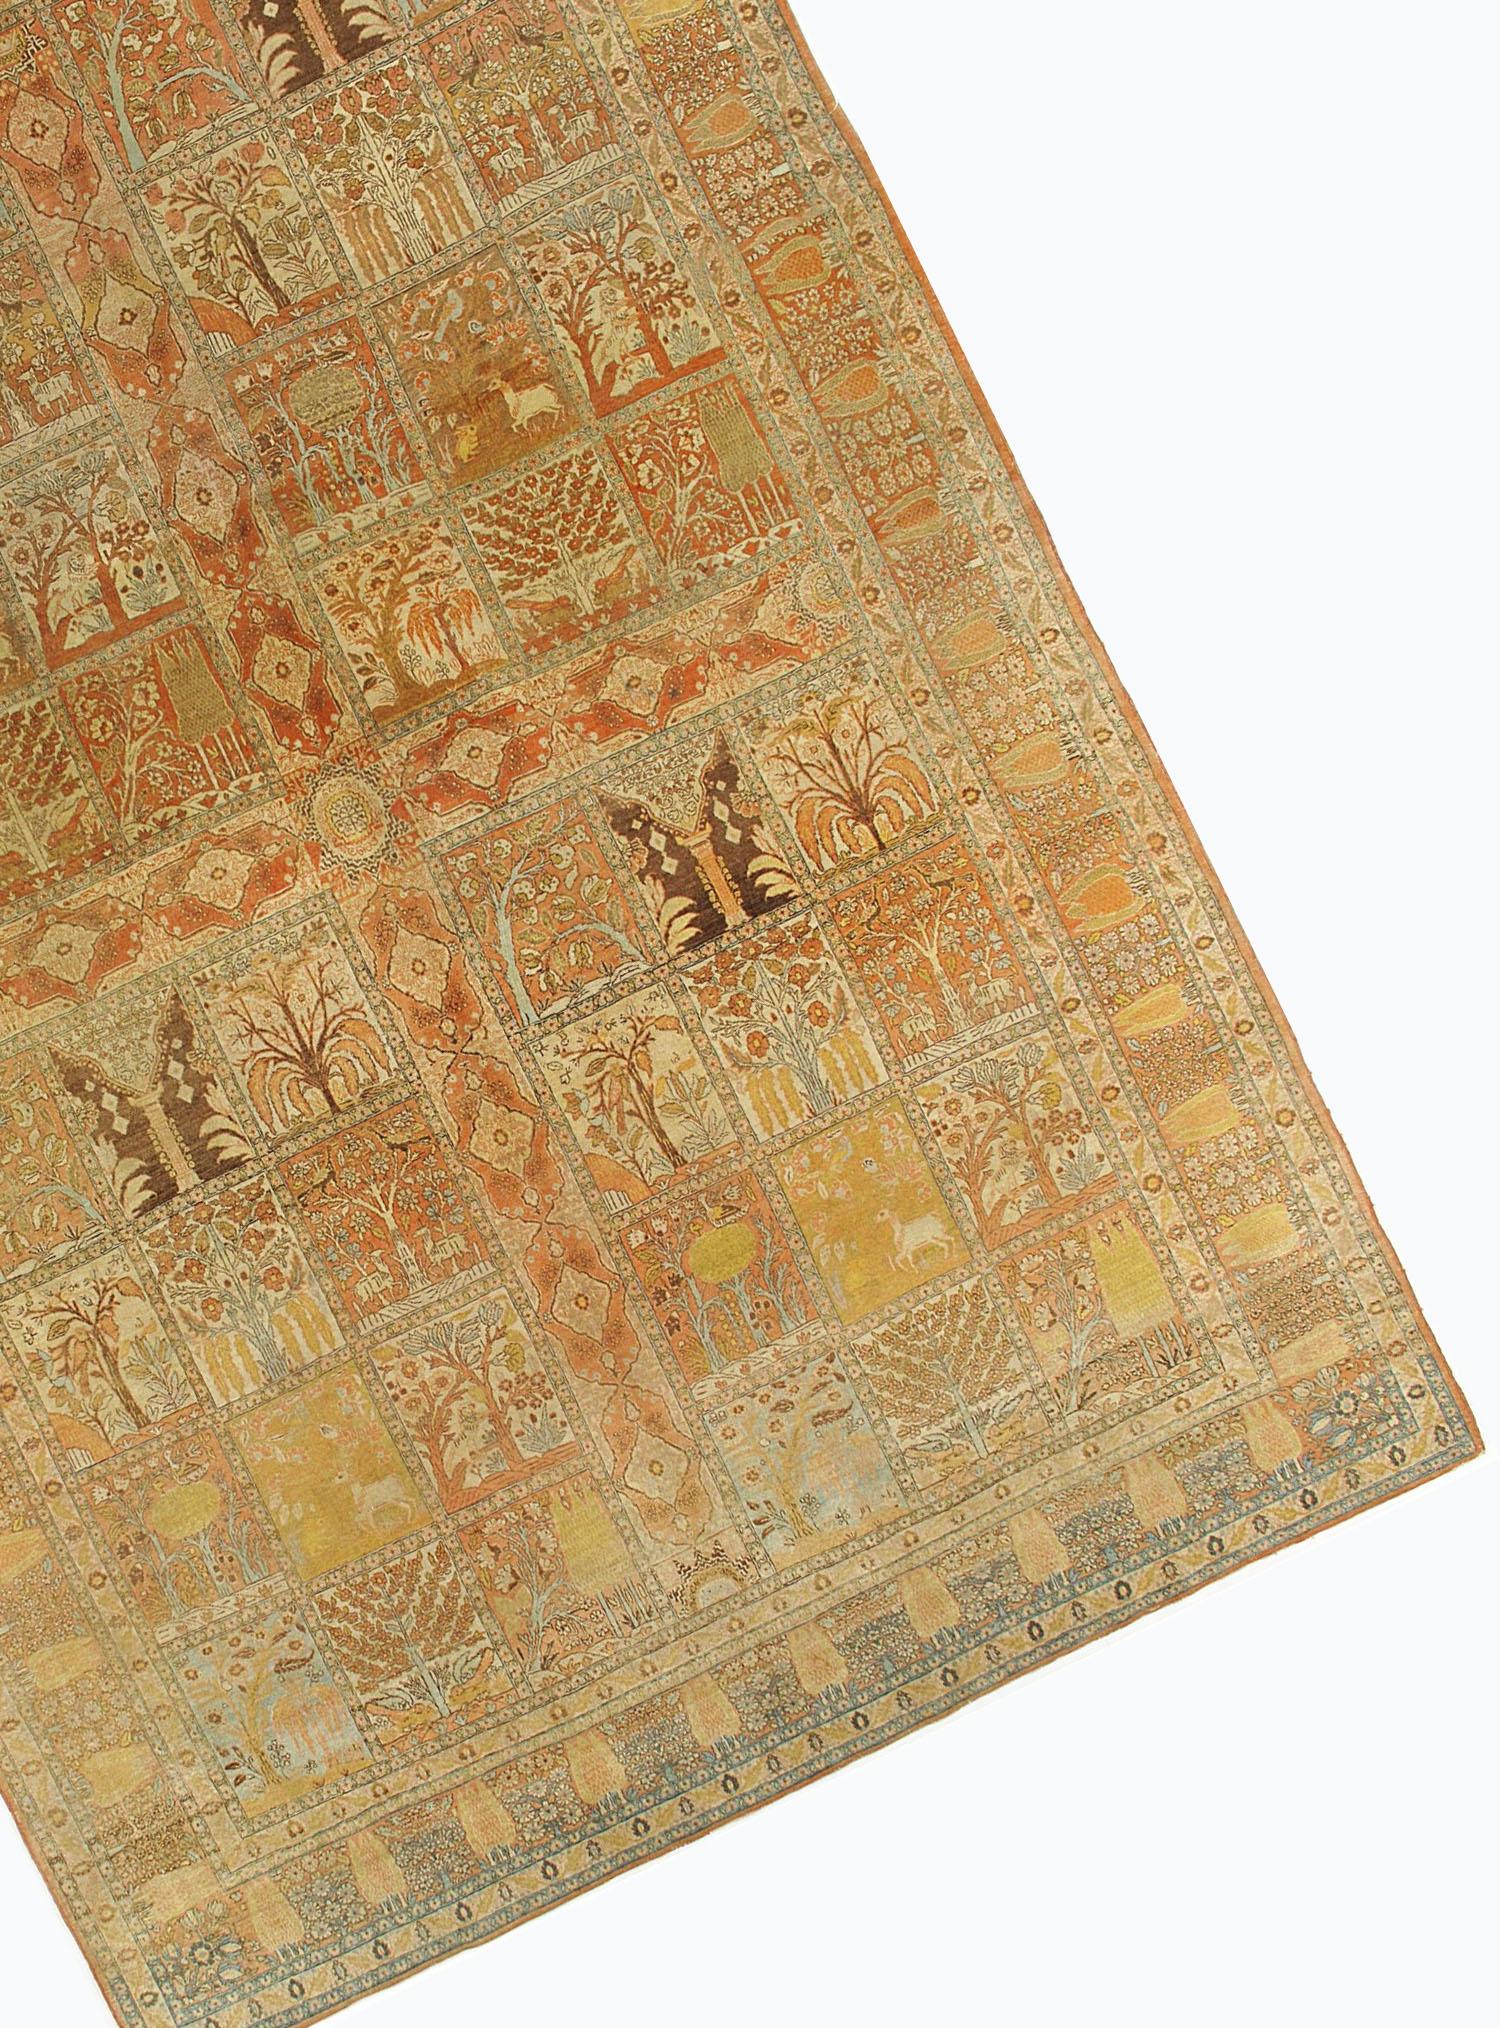 Hand-Woven Antique Tabriz Rug Carpet, circa 1880  9'6 x 13'6 For Sale